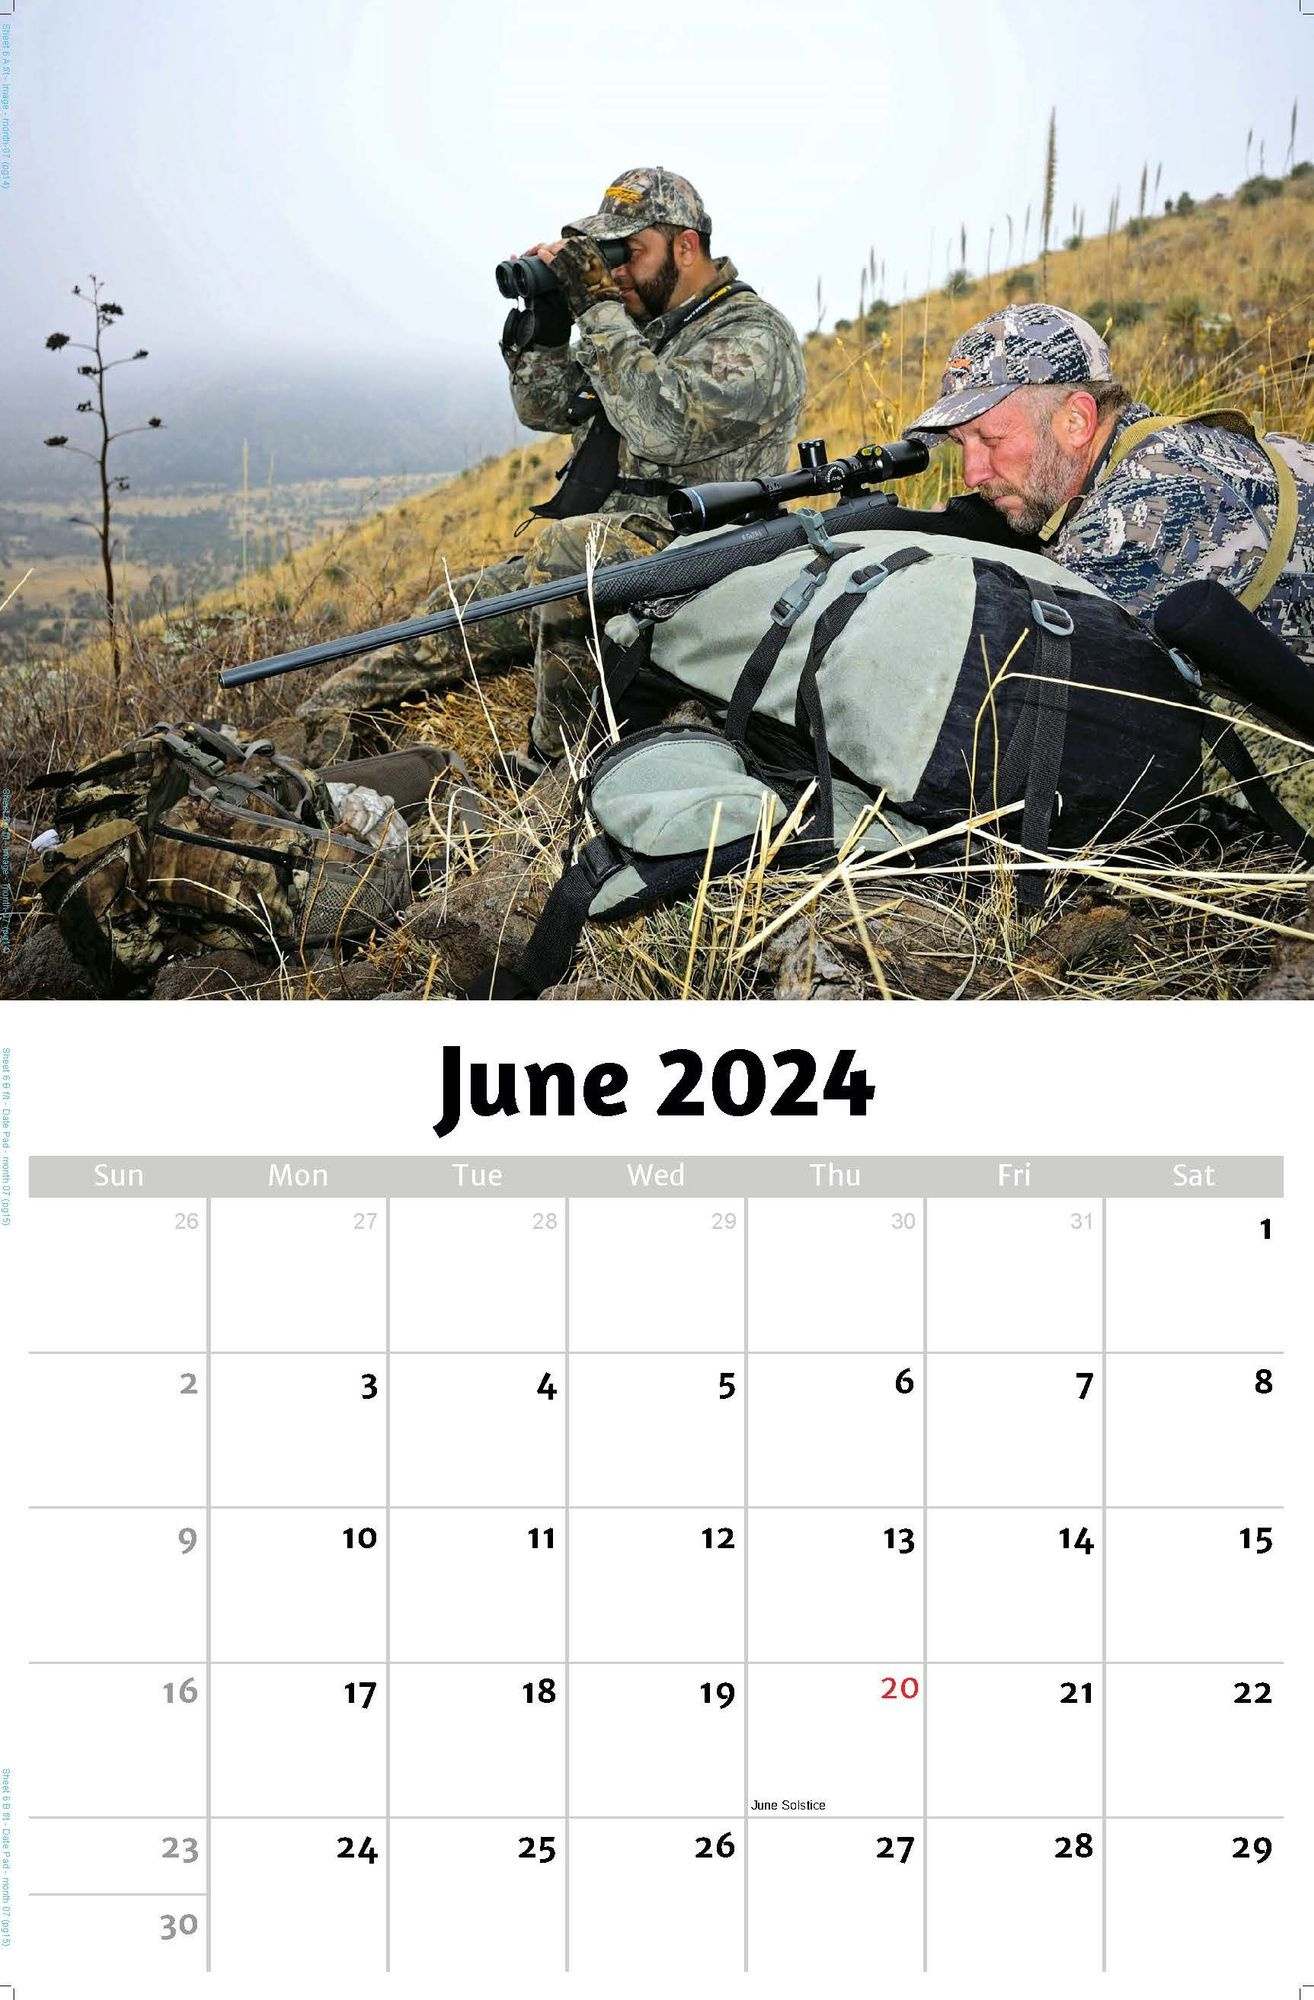 2024 Wall Calendar | Fishing And Hunting regarding Fishing Calendar For June 2024